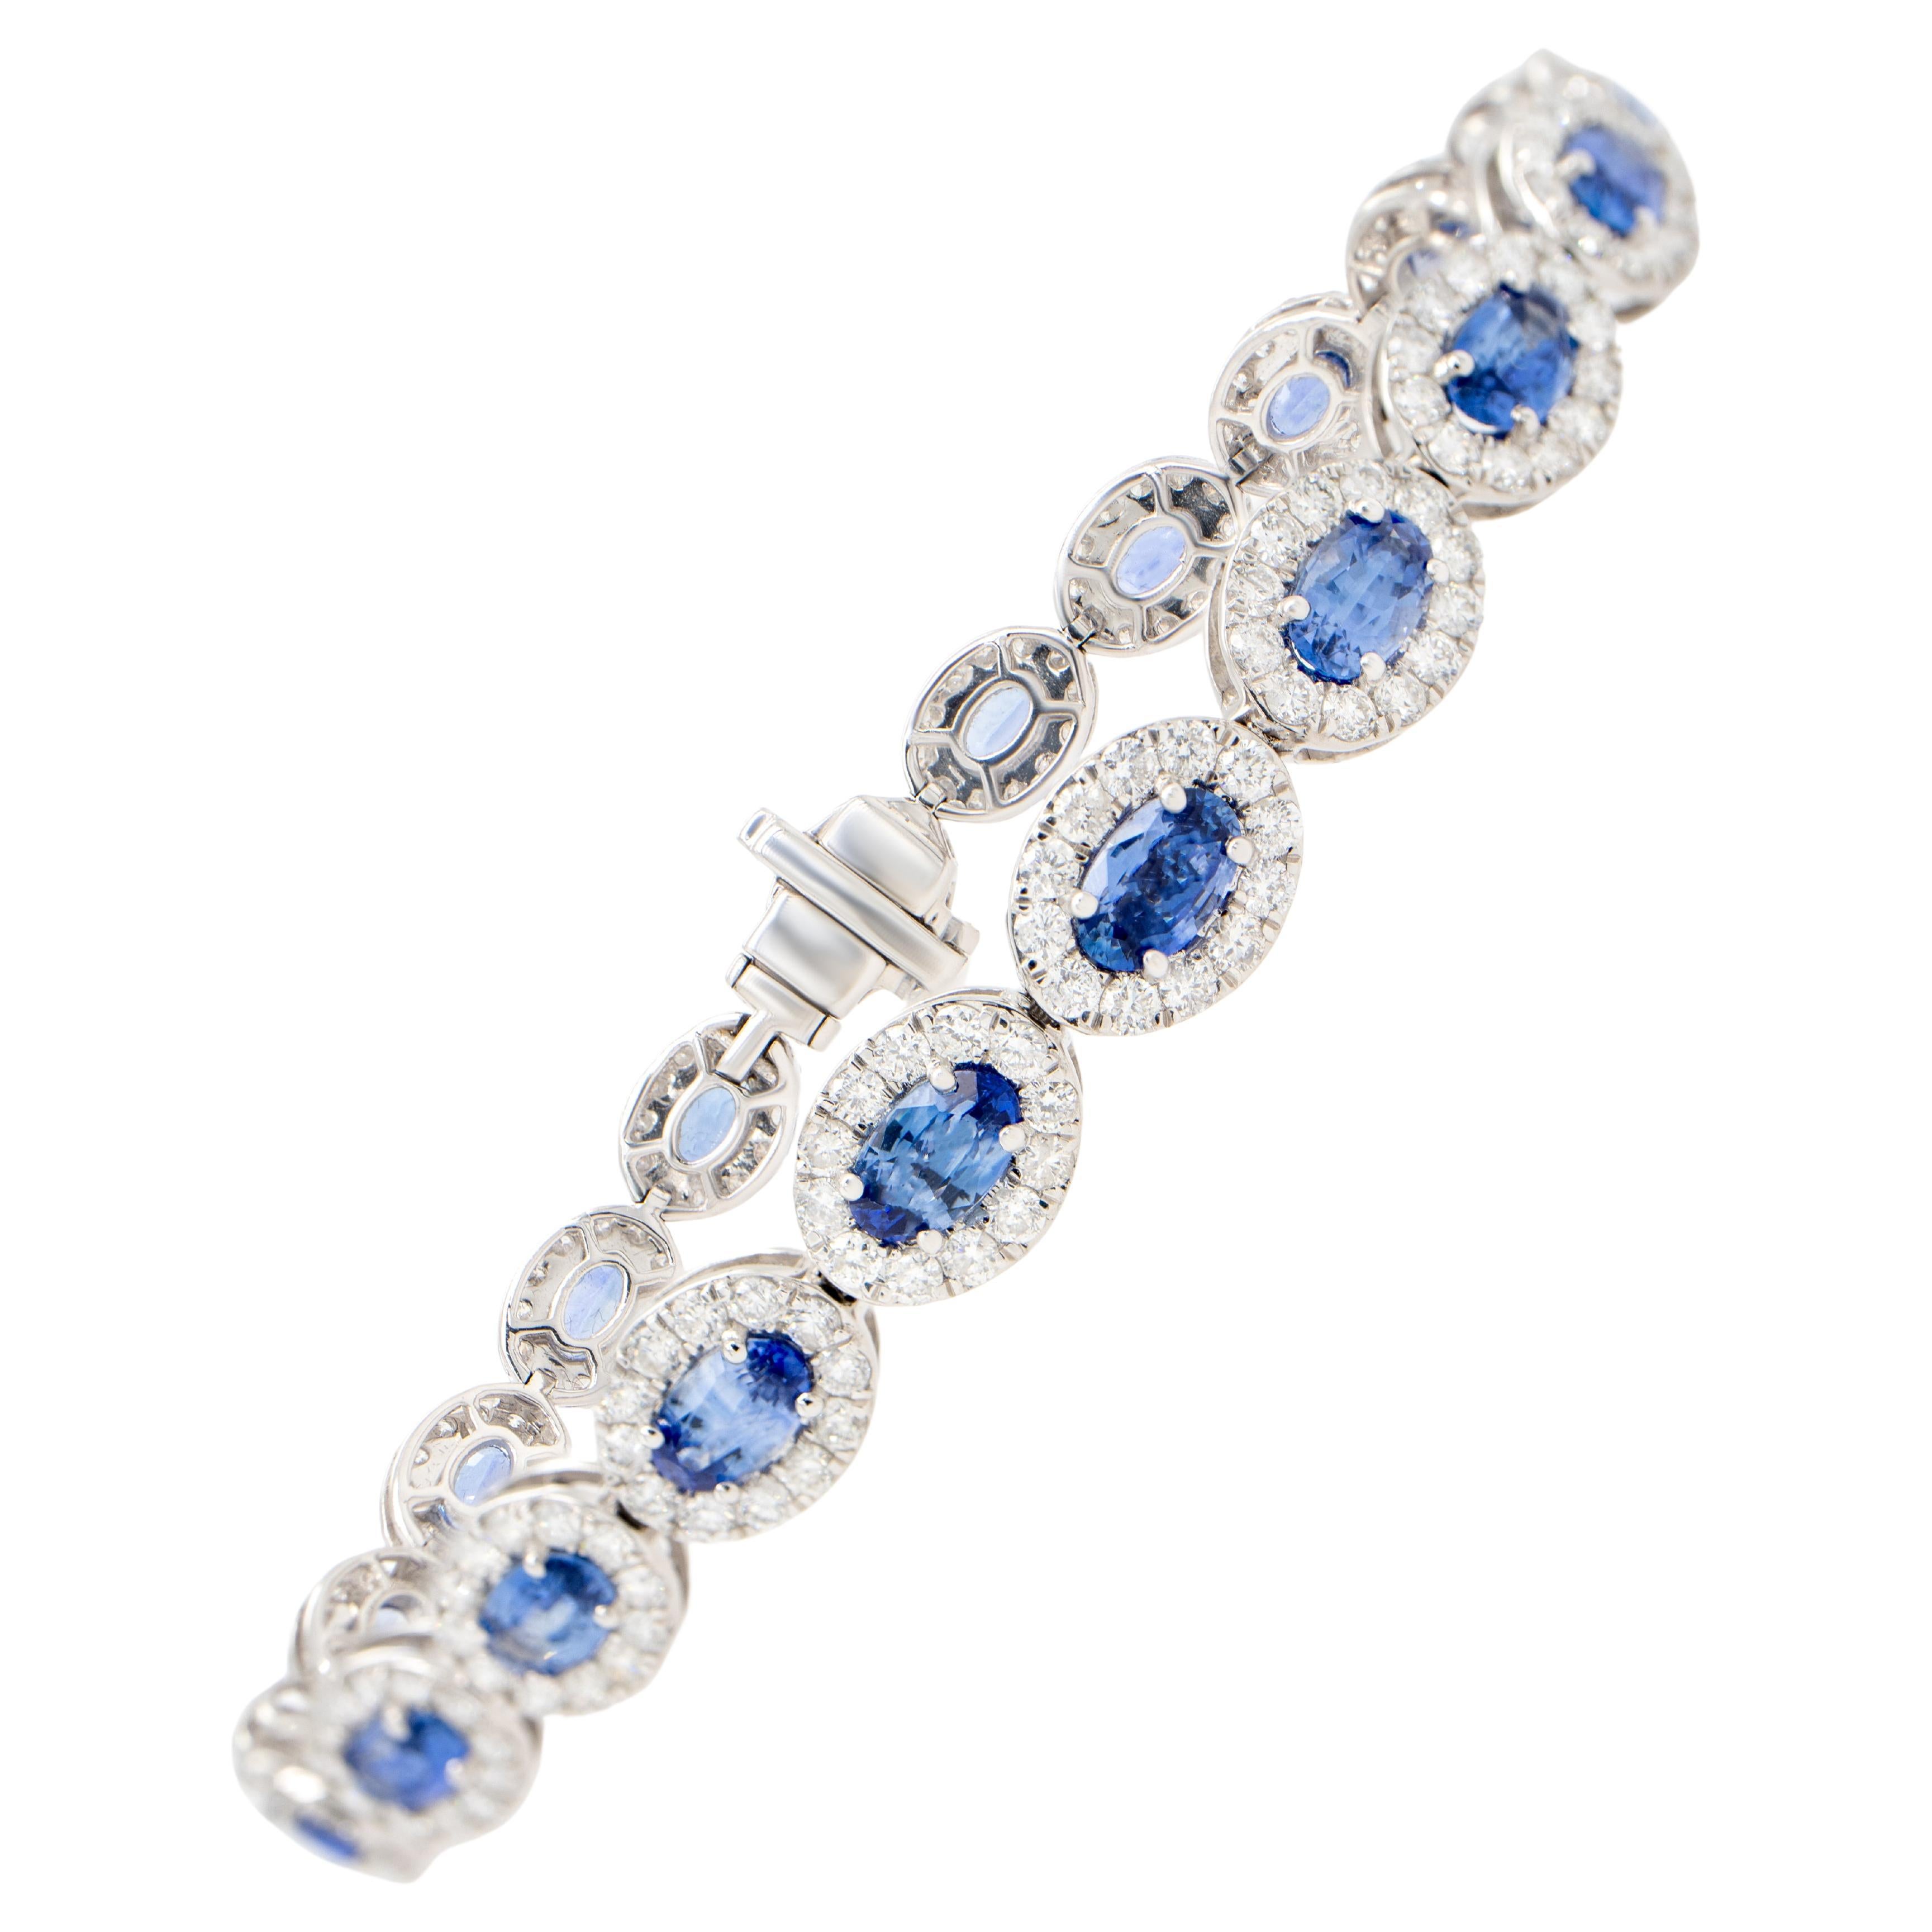 Blue Sapphire Bracelet Diamond Halo 10 Carats 18K Gold For Sale